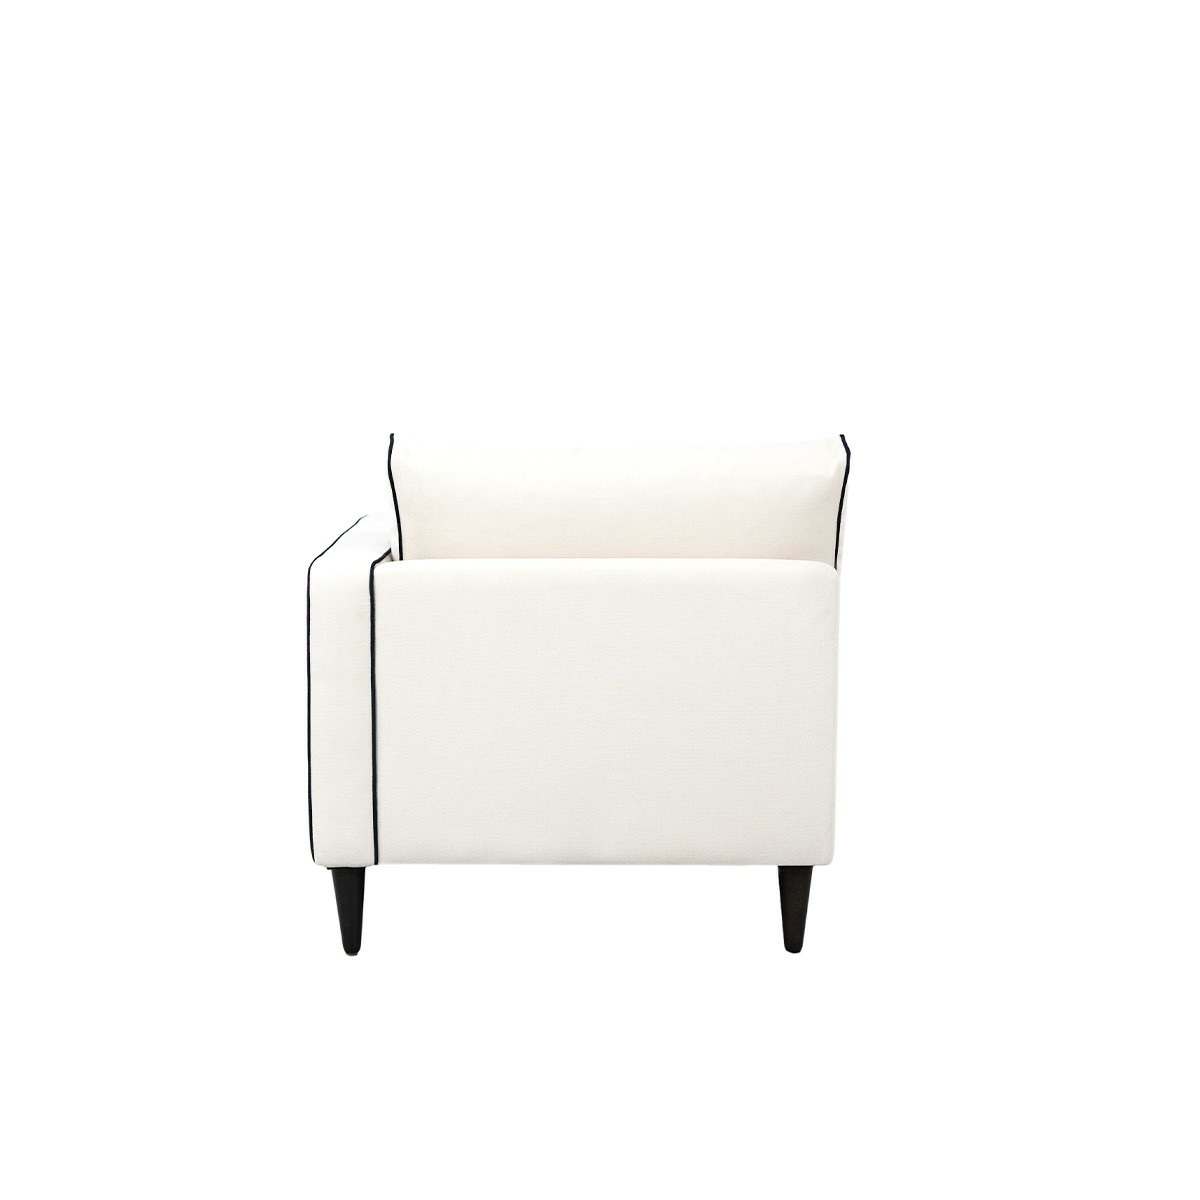 Noa sofa - Right armrest, Different Sizes - Cotton - image 6